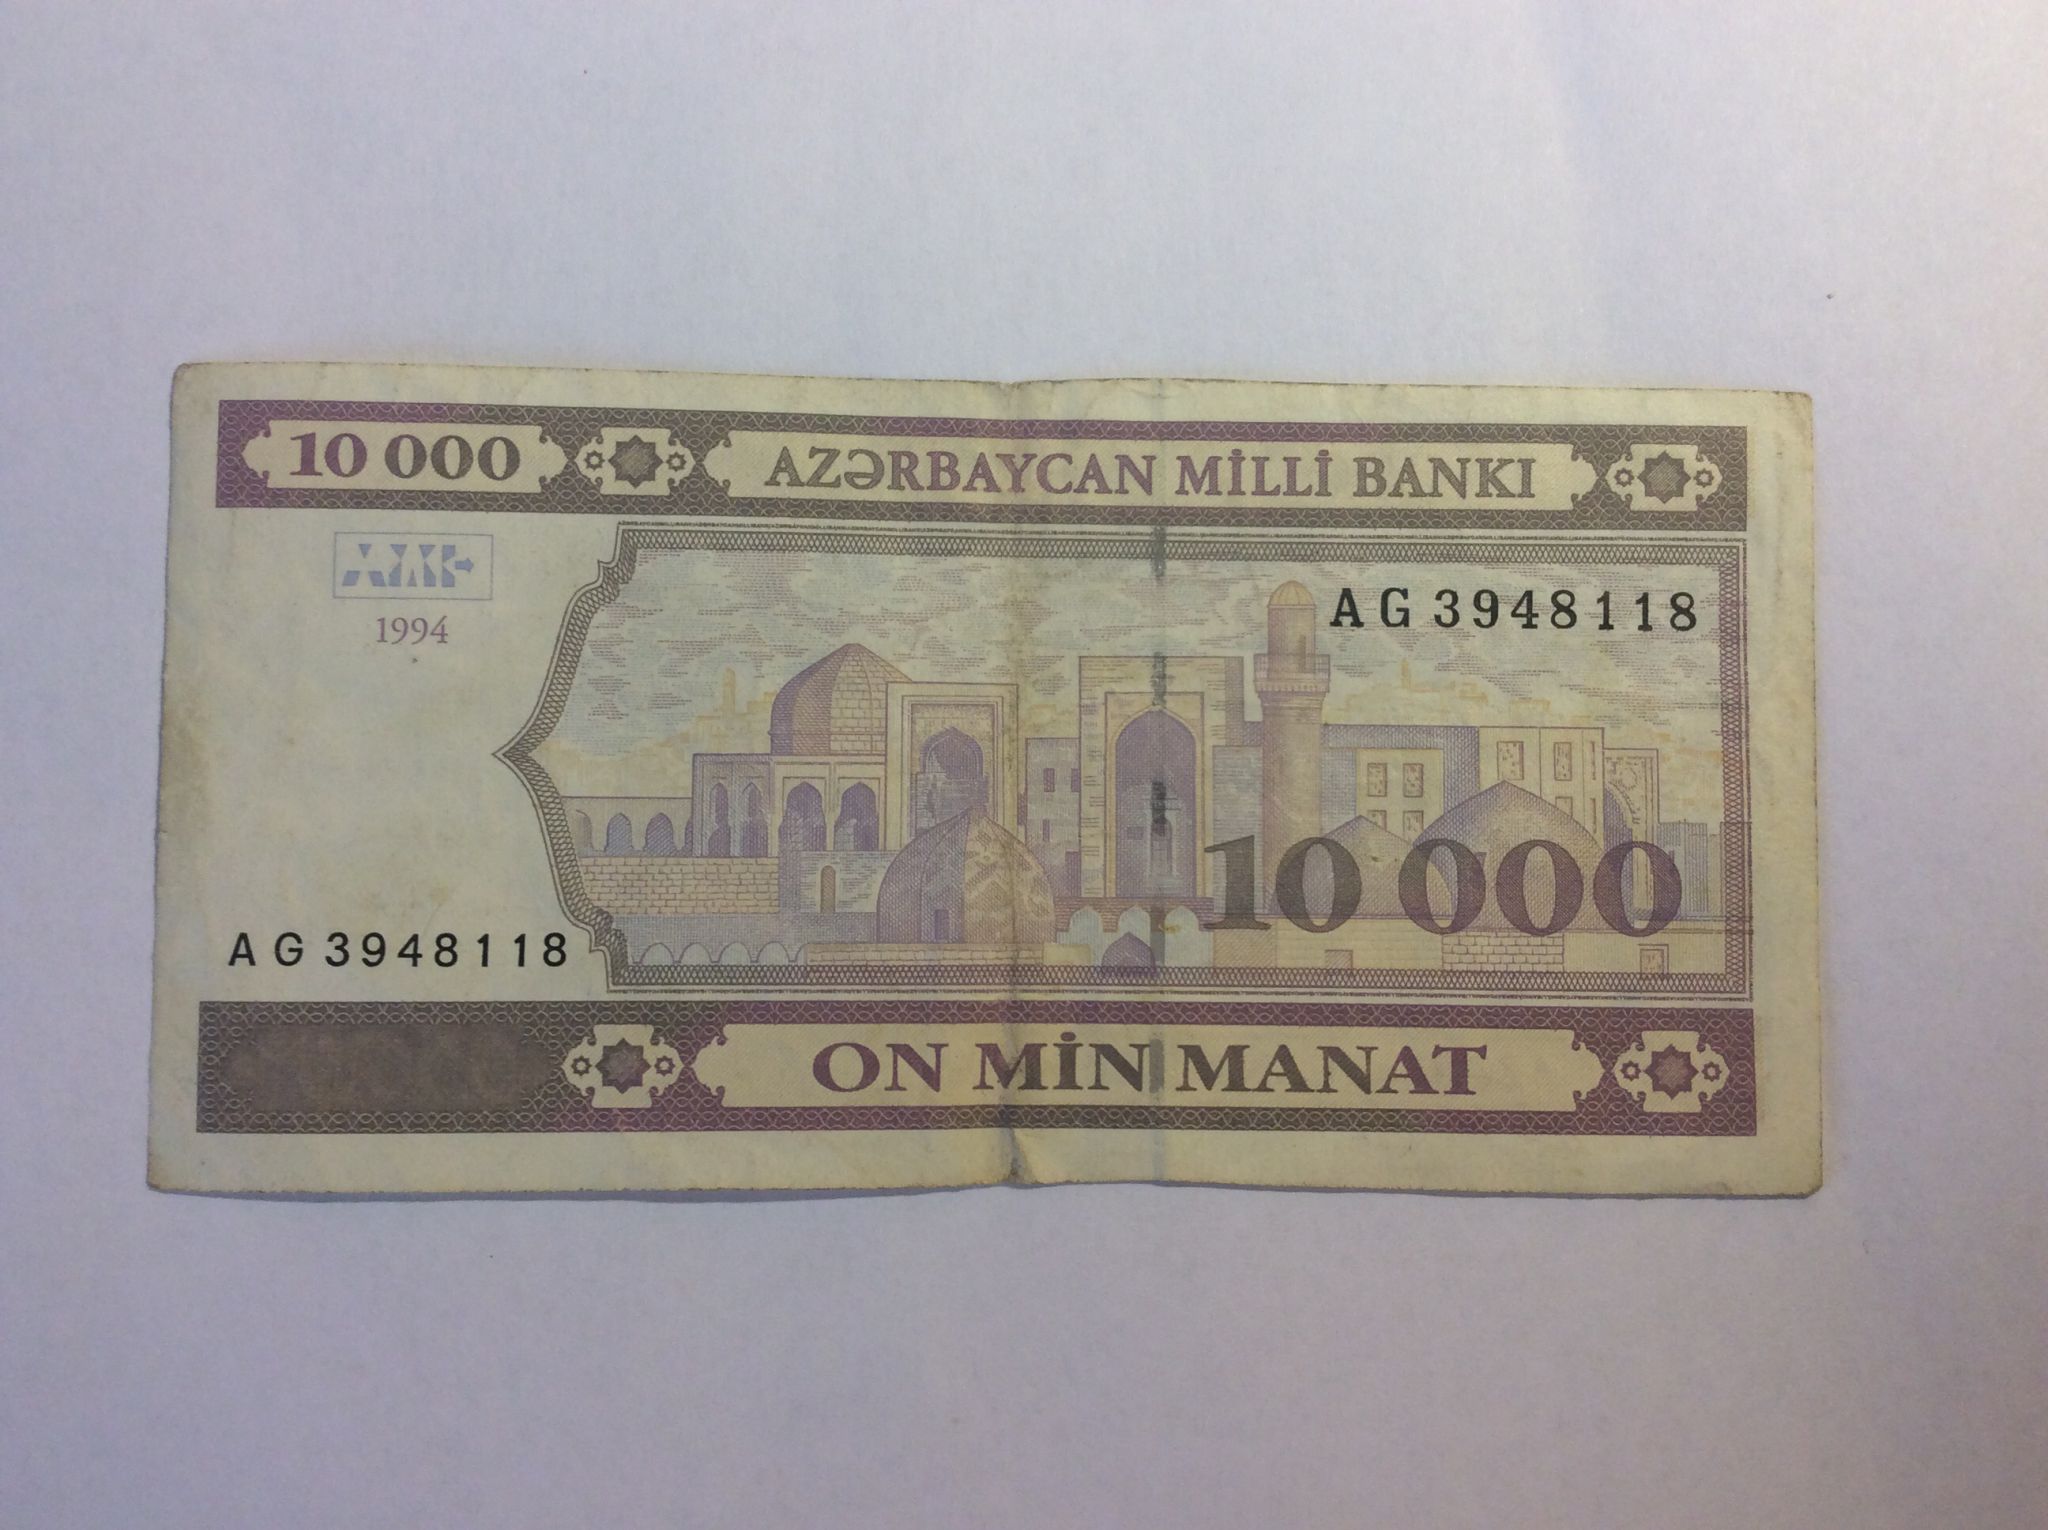 40000 рублей в манатах. 10000 Манат. 10000 Манатов 1994 года Азербайджан. Азербайджанский манат 10000. 1000 Манат 1994.